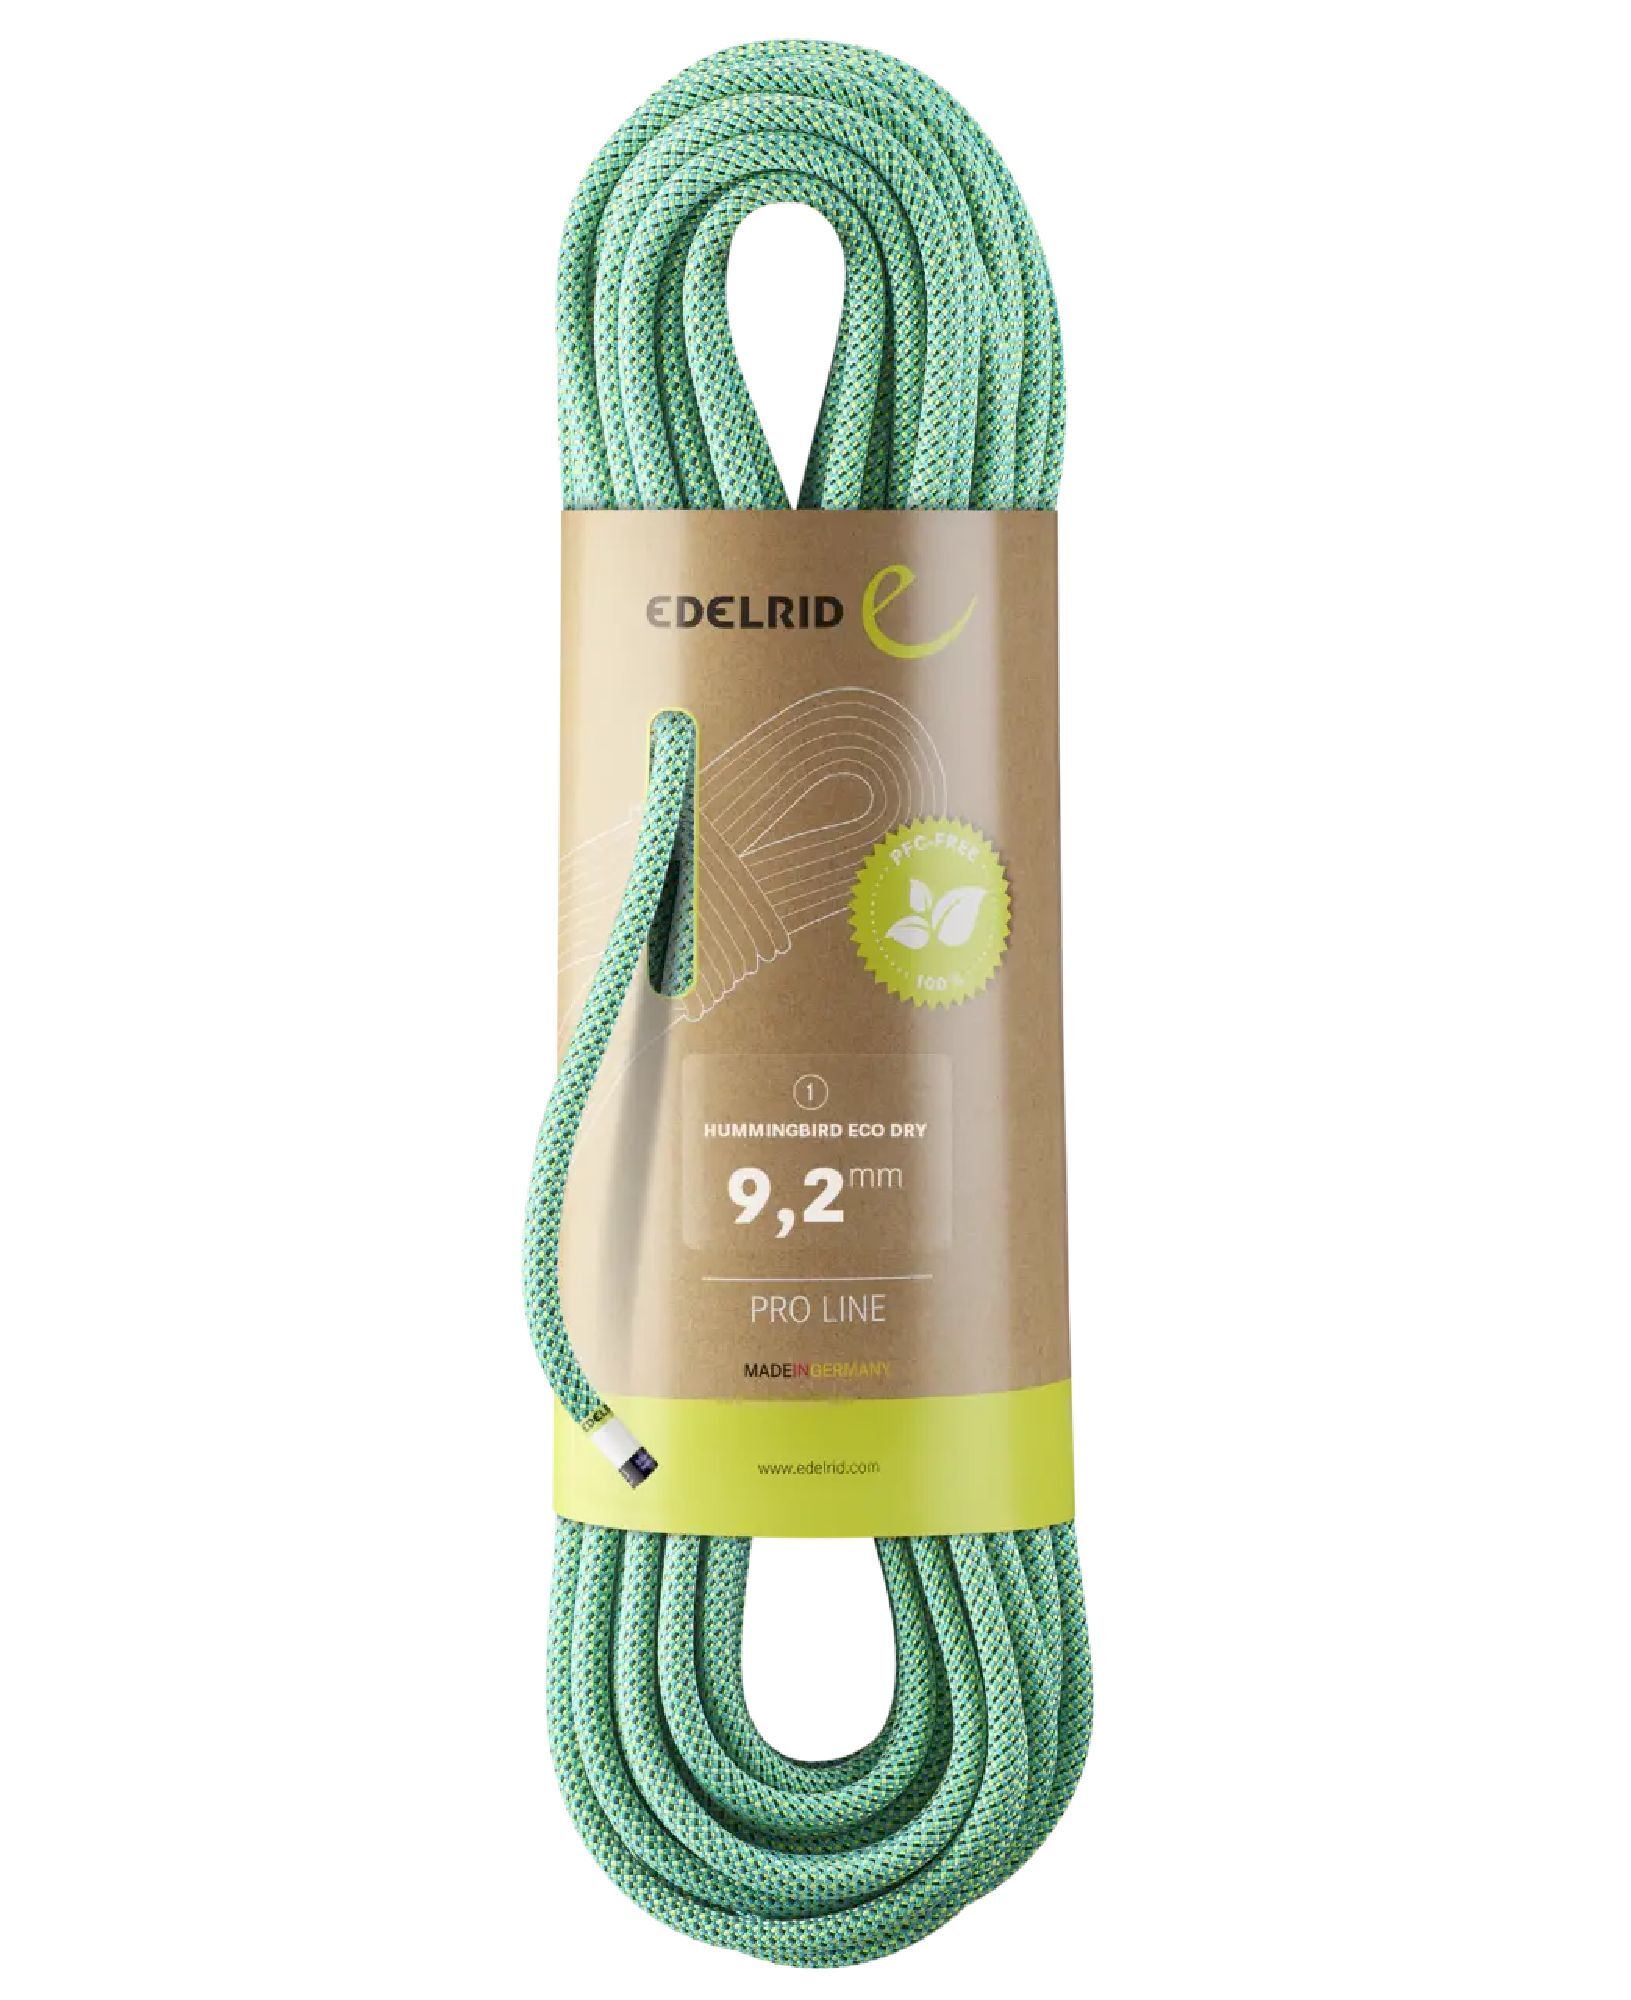 Edelrid Hummingbird Eco Dry 9,2mm - Climbing rope | Hardloop